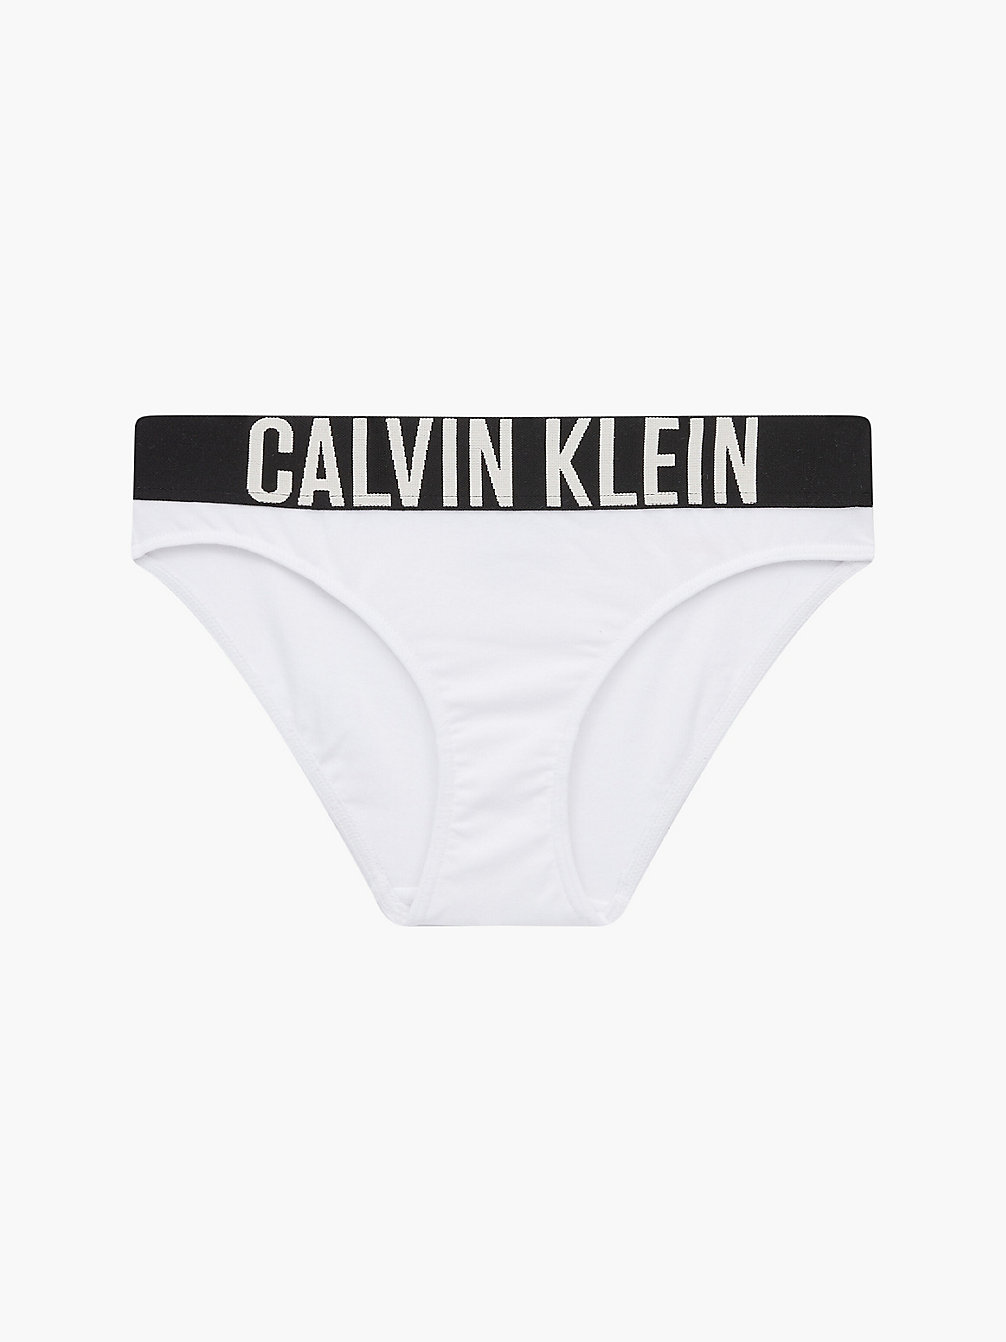 PVHWHITE/PVHWHITE Lot De 2 Culottes Pour Fille - Intense Power undefined girls Calvin Klein